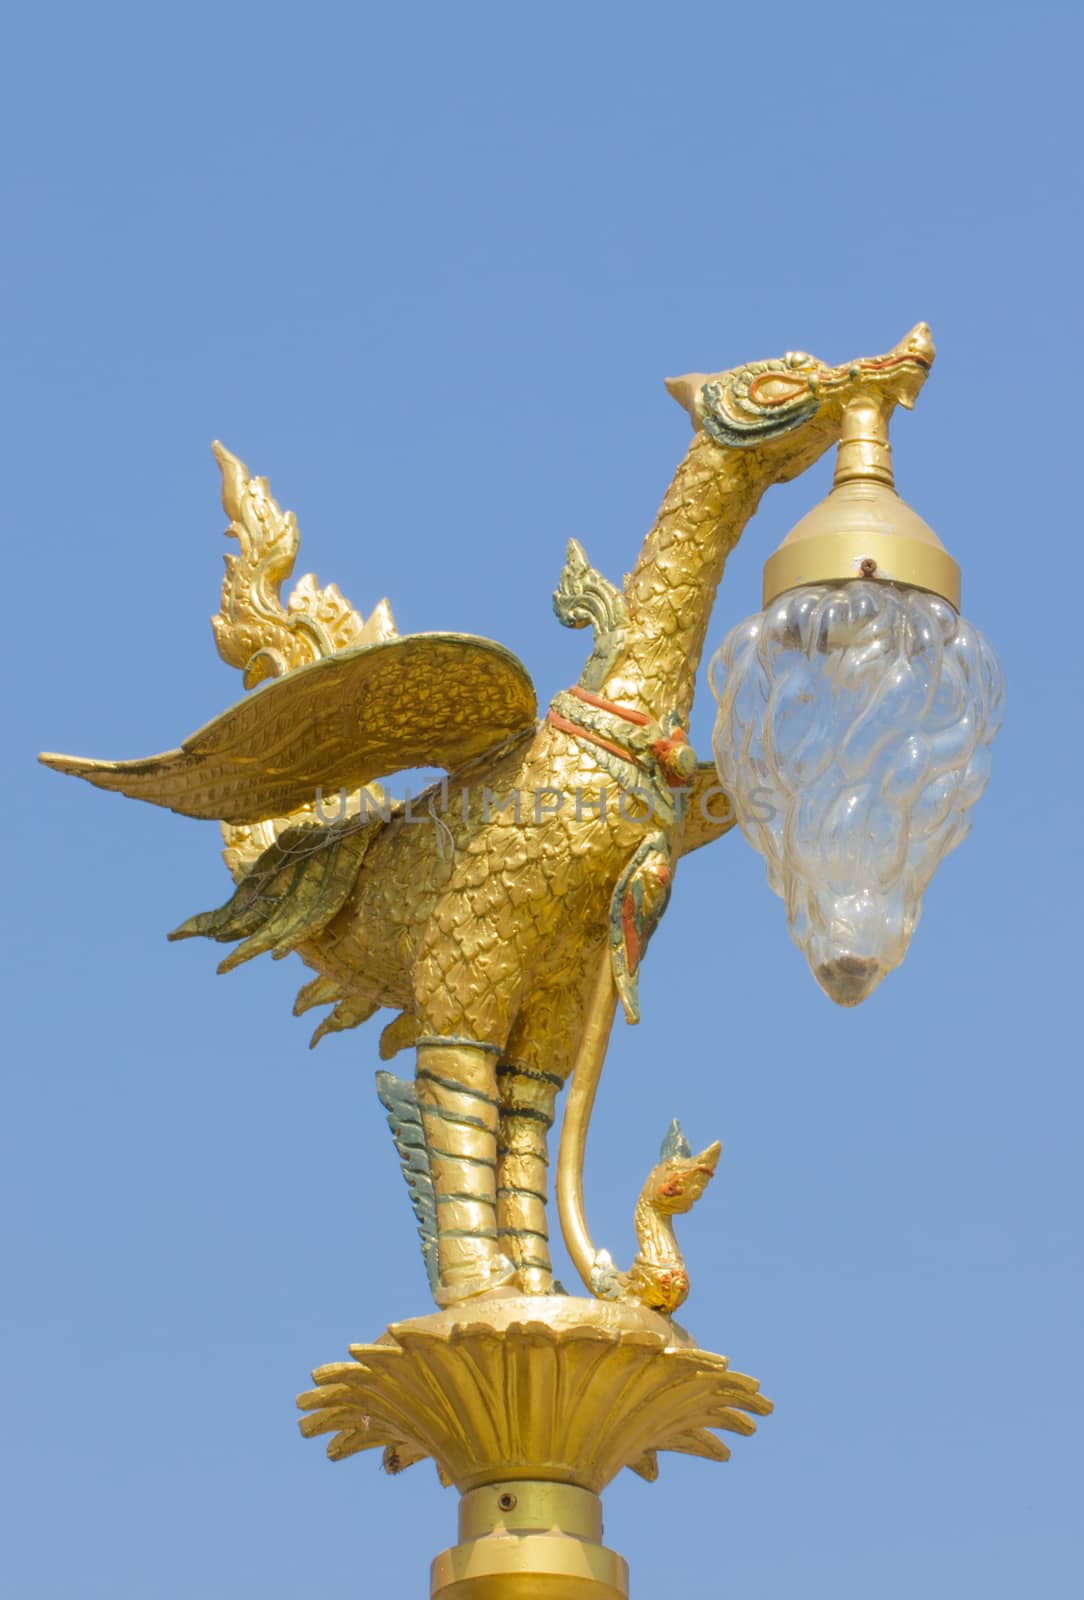 Golden swan lamp on street in Thai Style in blue sky background